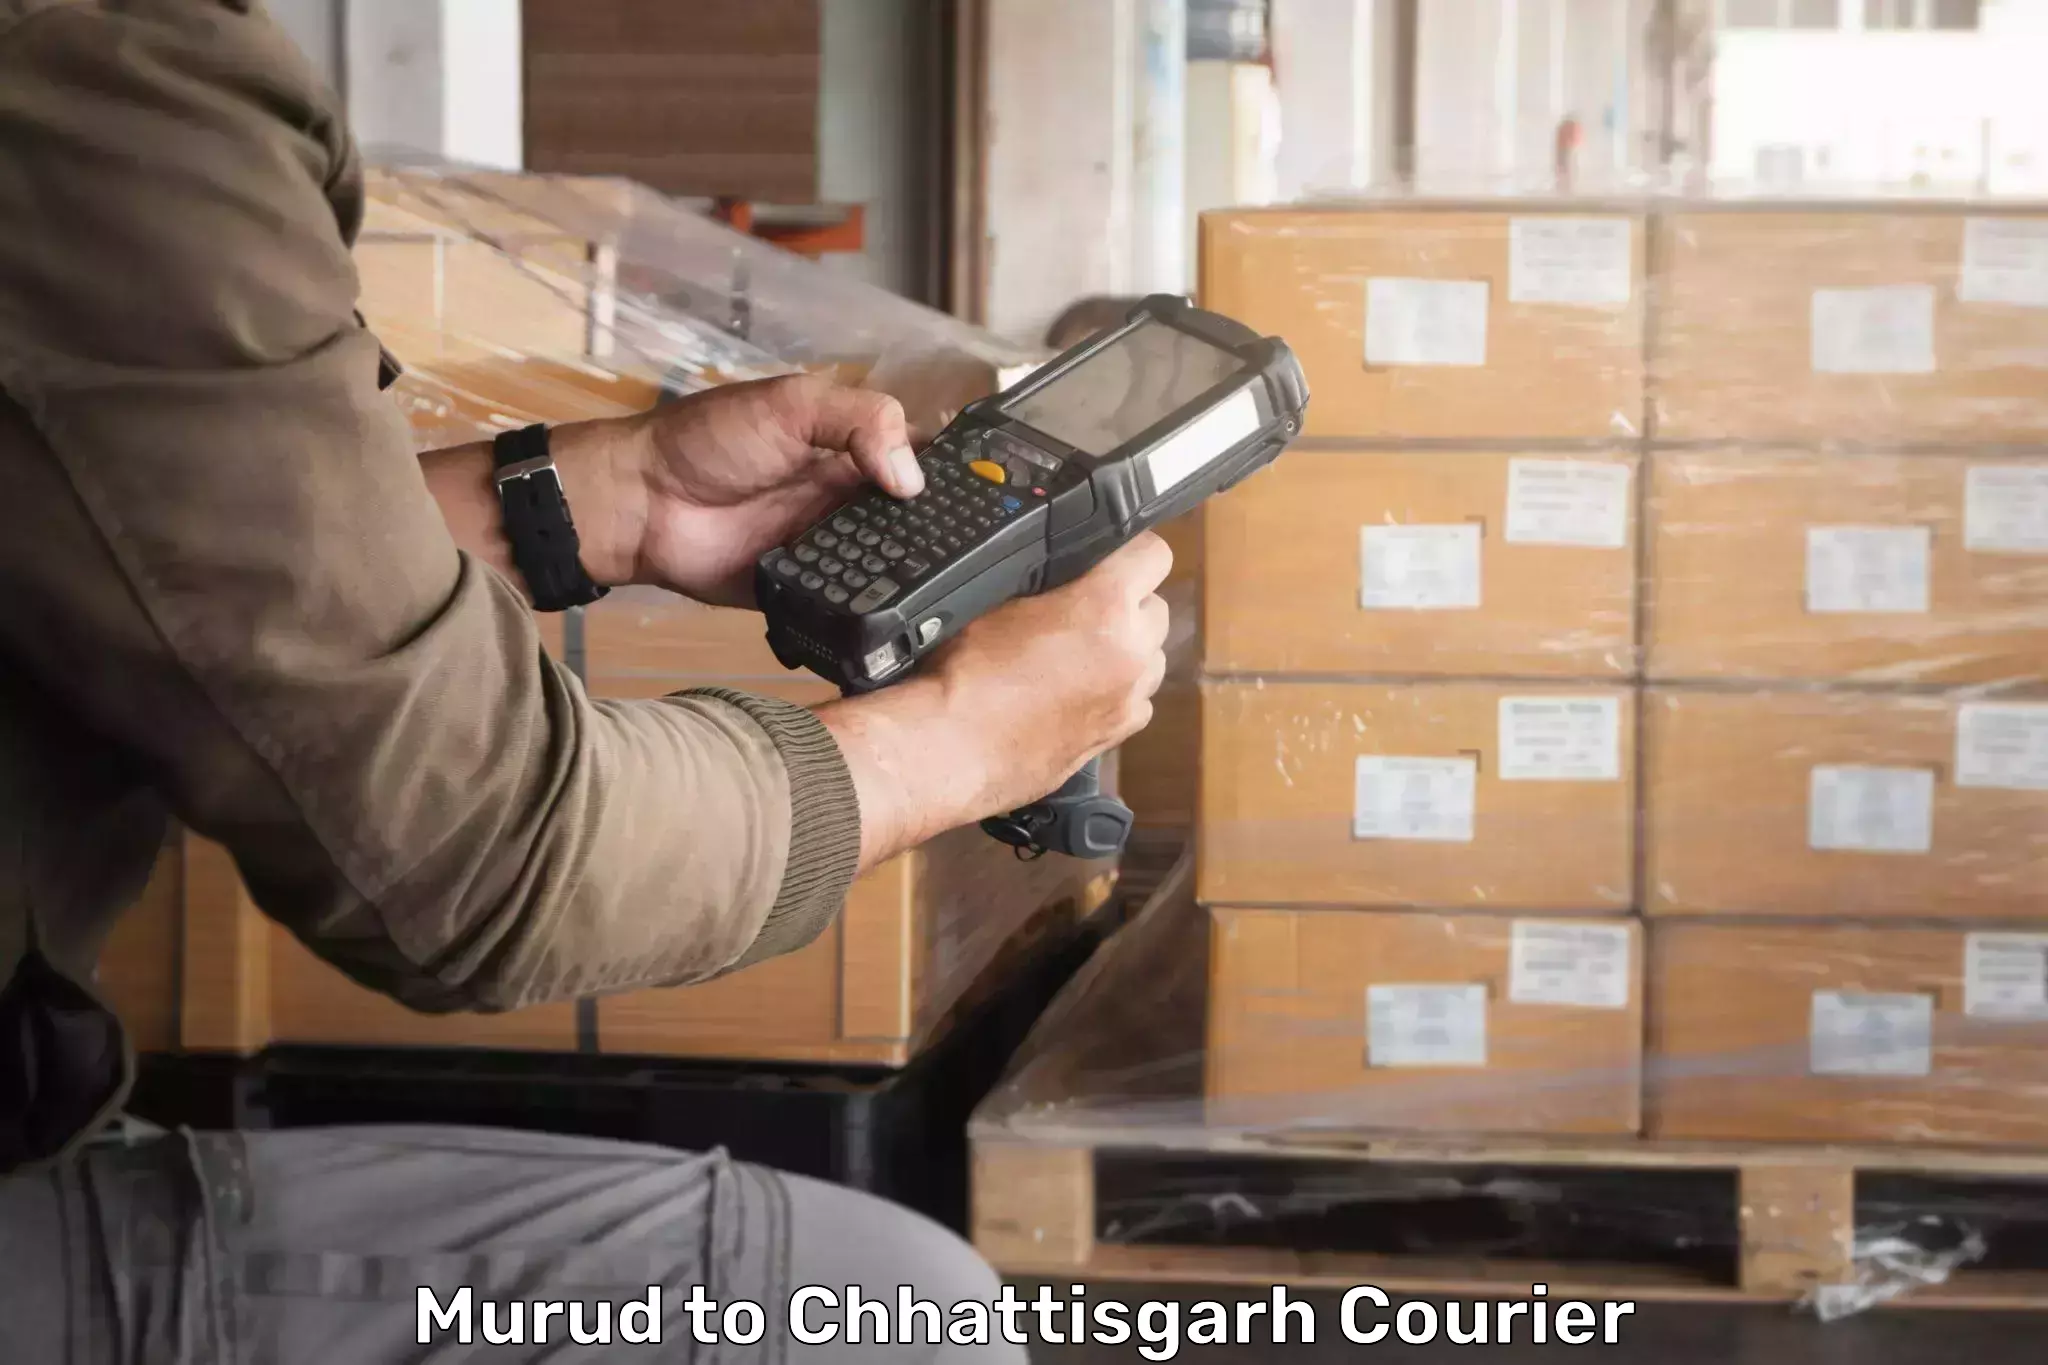 Subscription-based courier Murud to Chhattisgarh